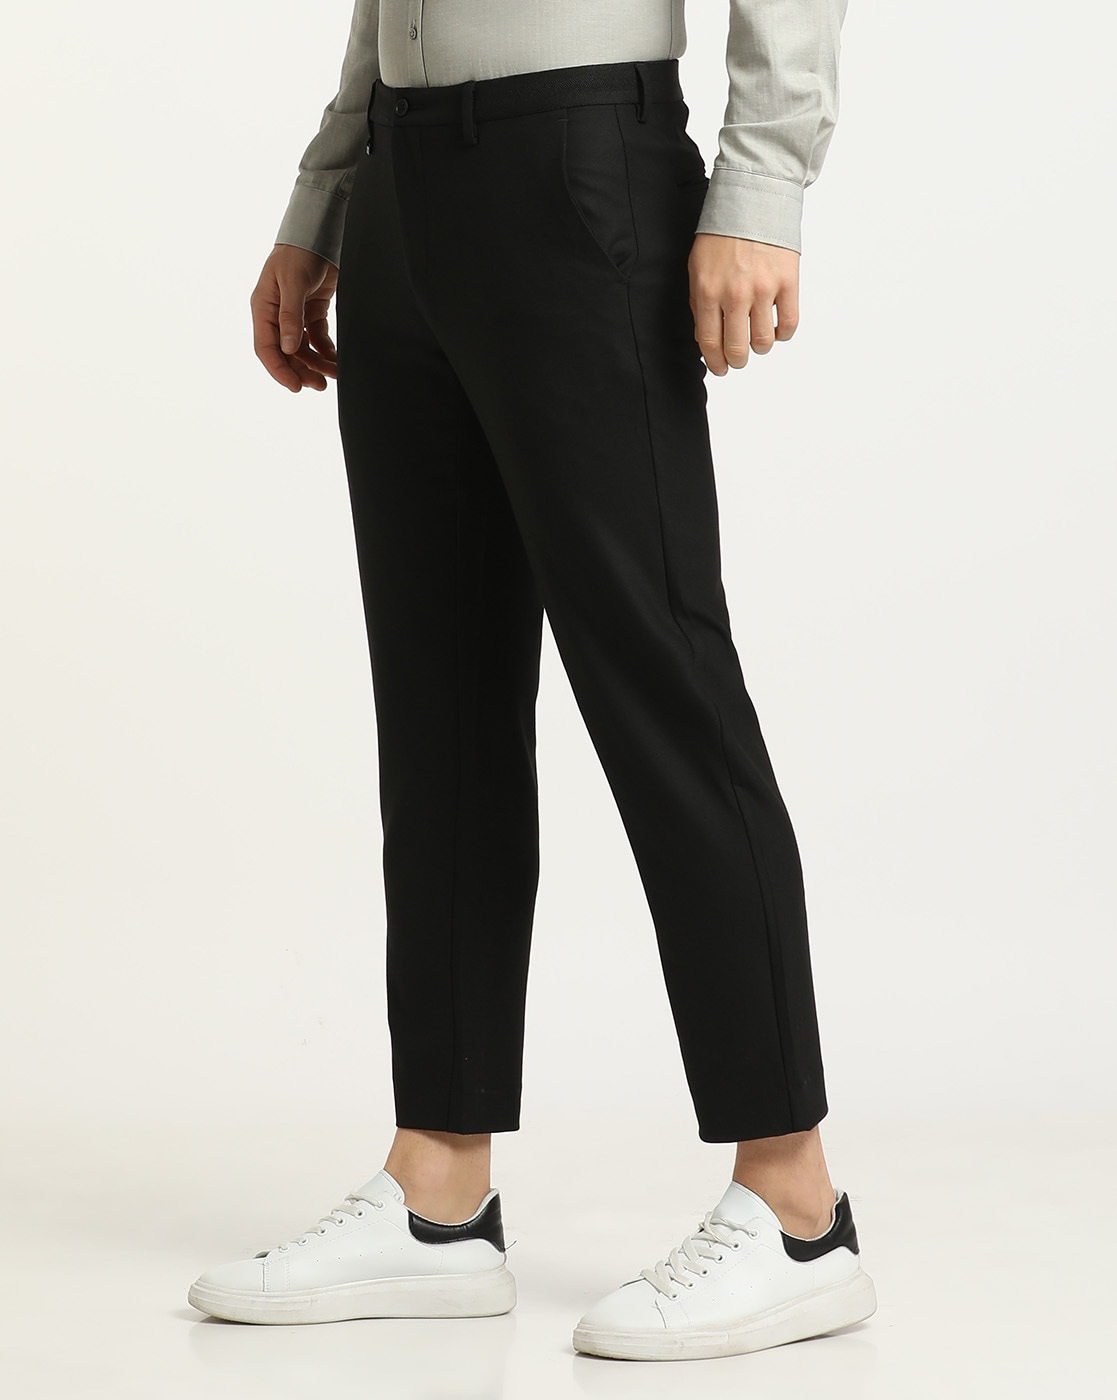 Shop Ladies Cropped Trousers Online Australia - Scanlan Theodore